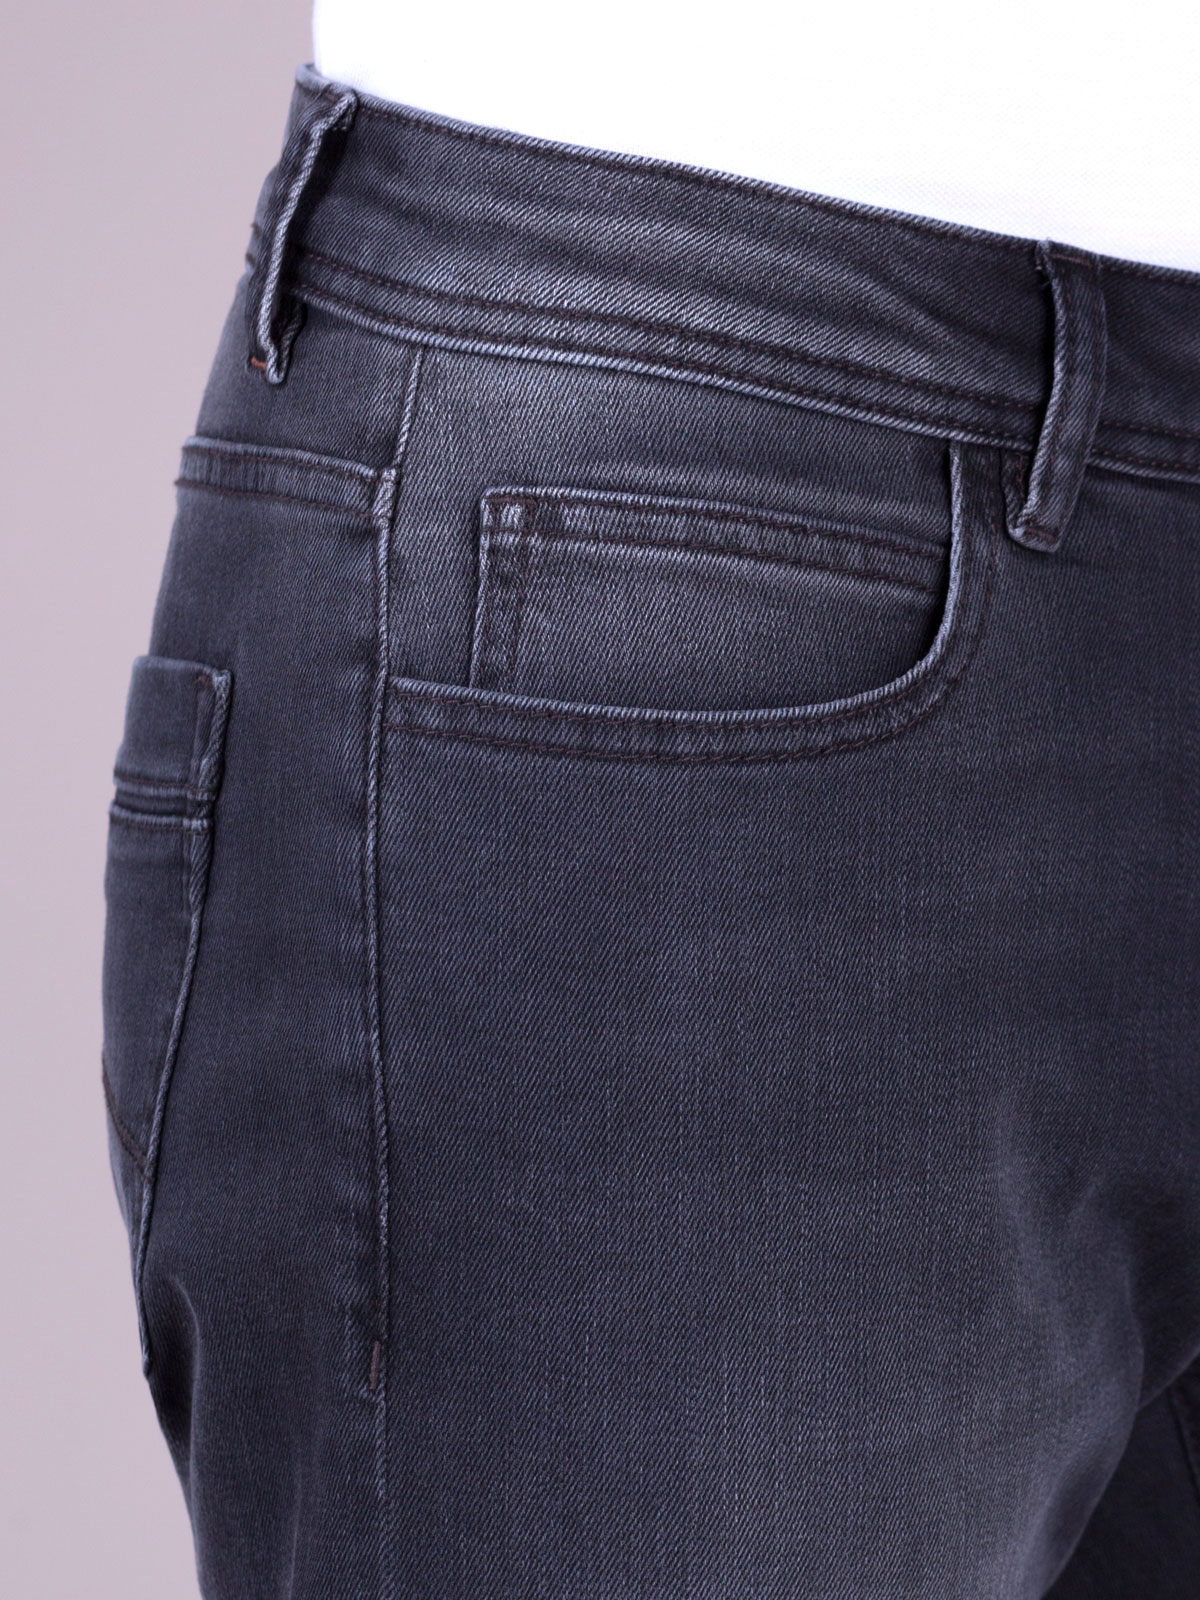 Graphite gray jeans - 62116 € 27.56 img2